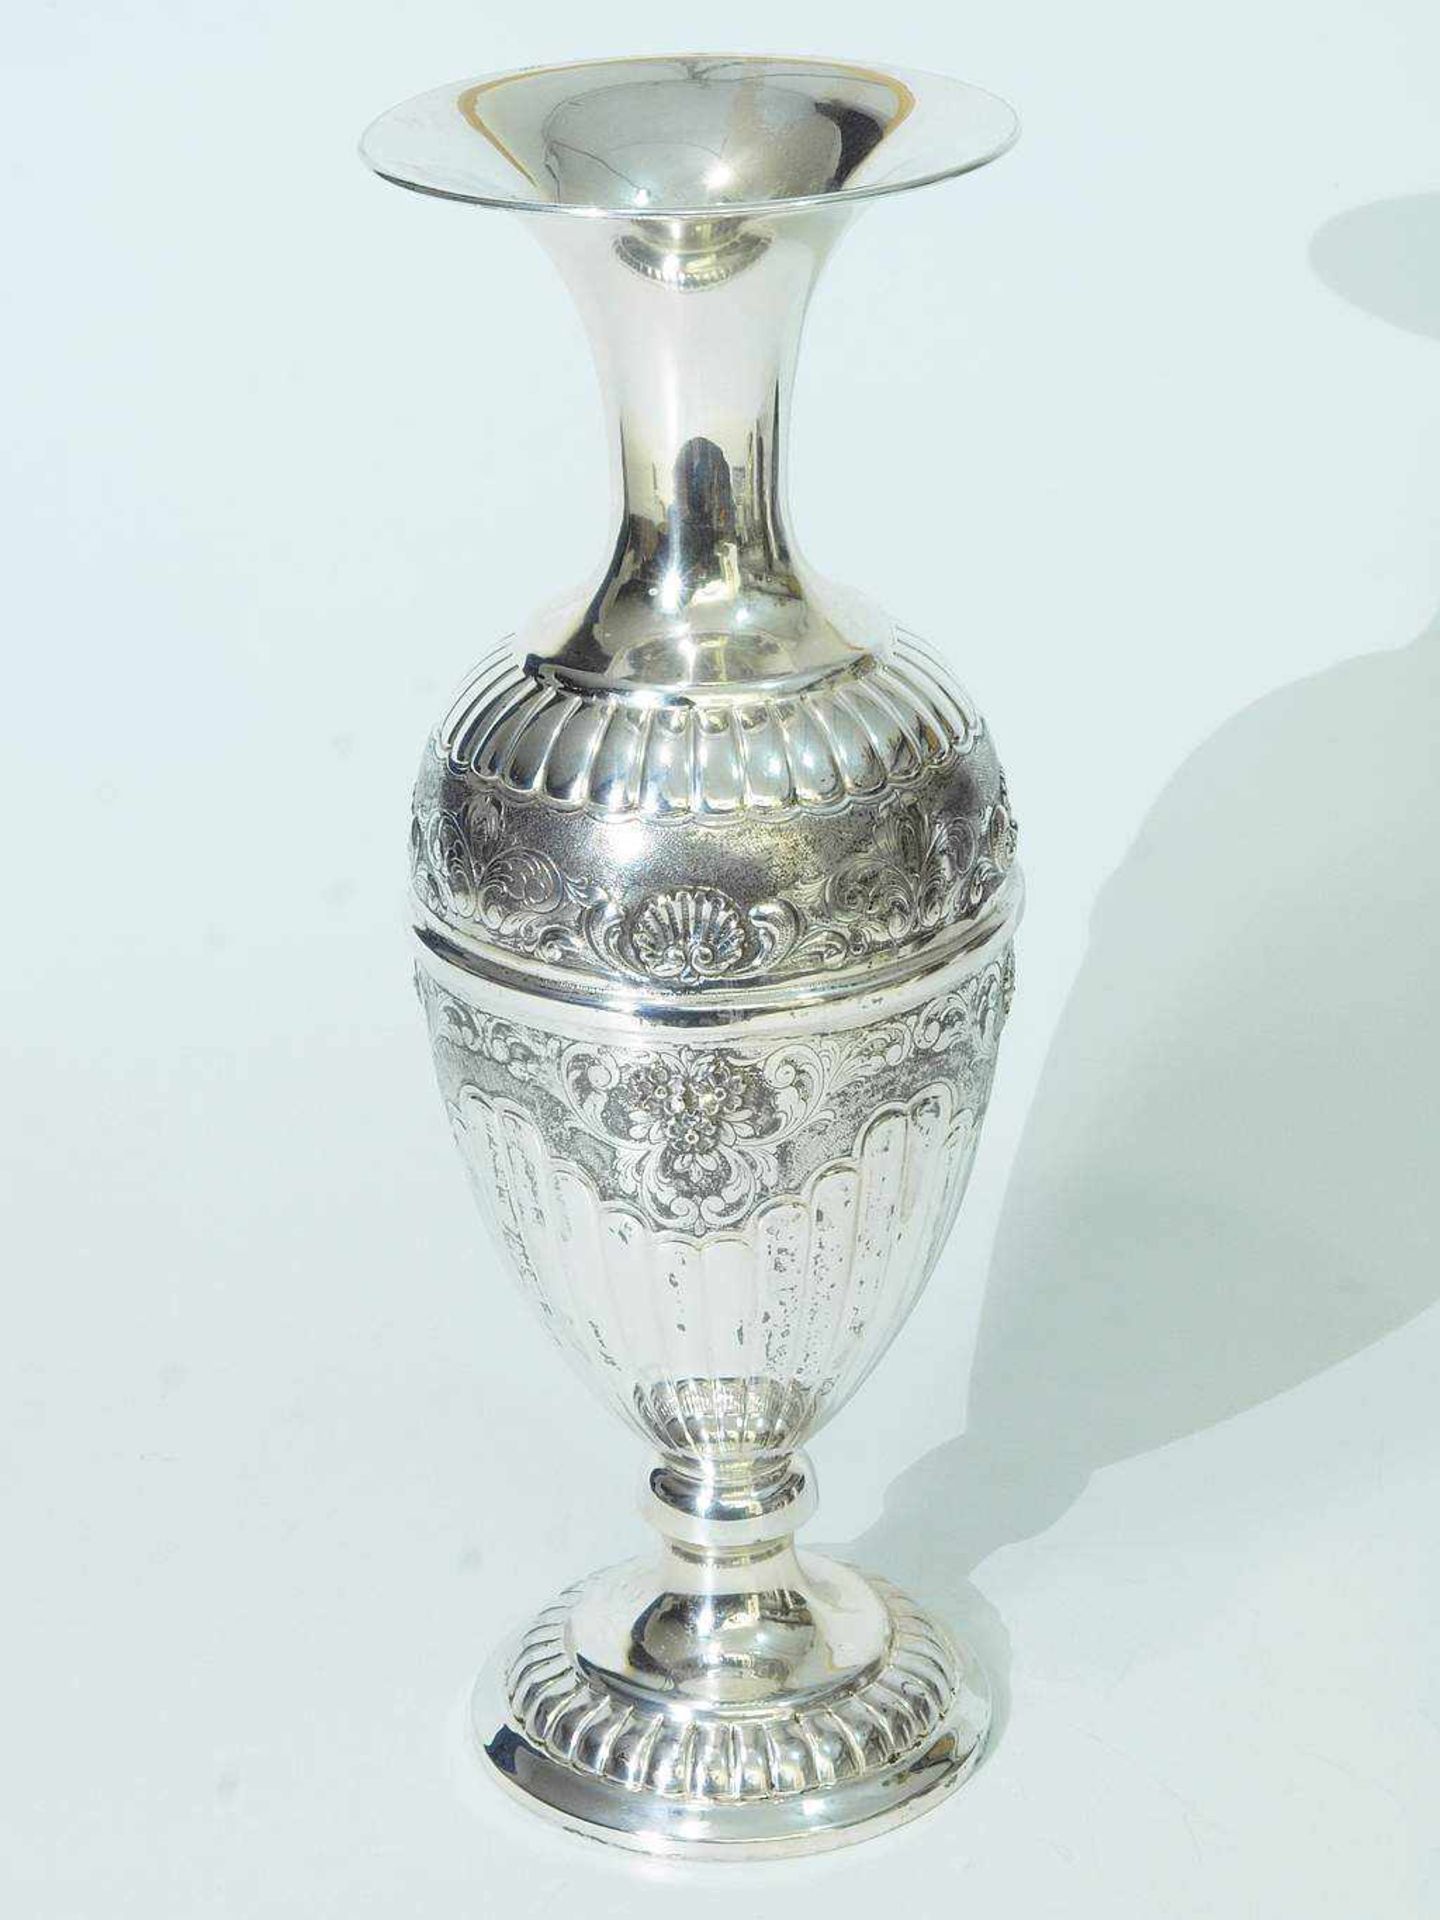 Große Vase. Große Vase. 20. Jahrhundert. Punze 800, Handarbeit. Ovoide repräsentative Form mit - Bild 2 aus 4